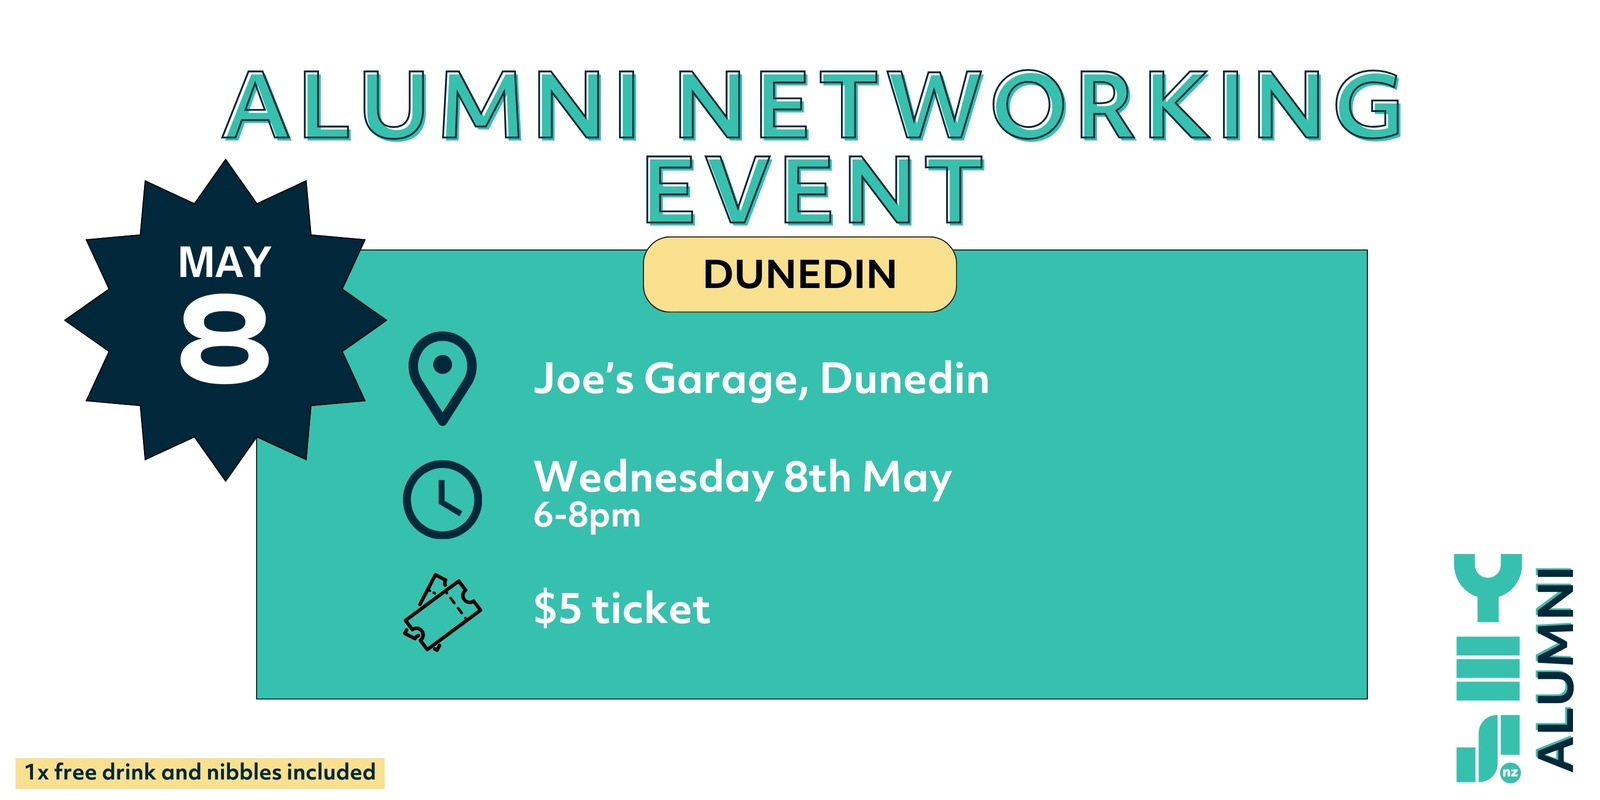 Banner image for Alumni Networking Event - Dunedin